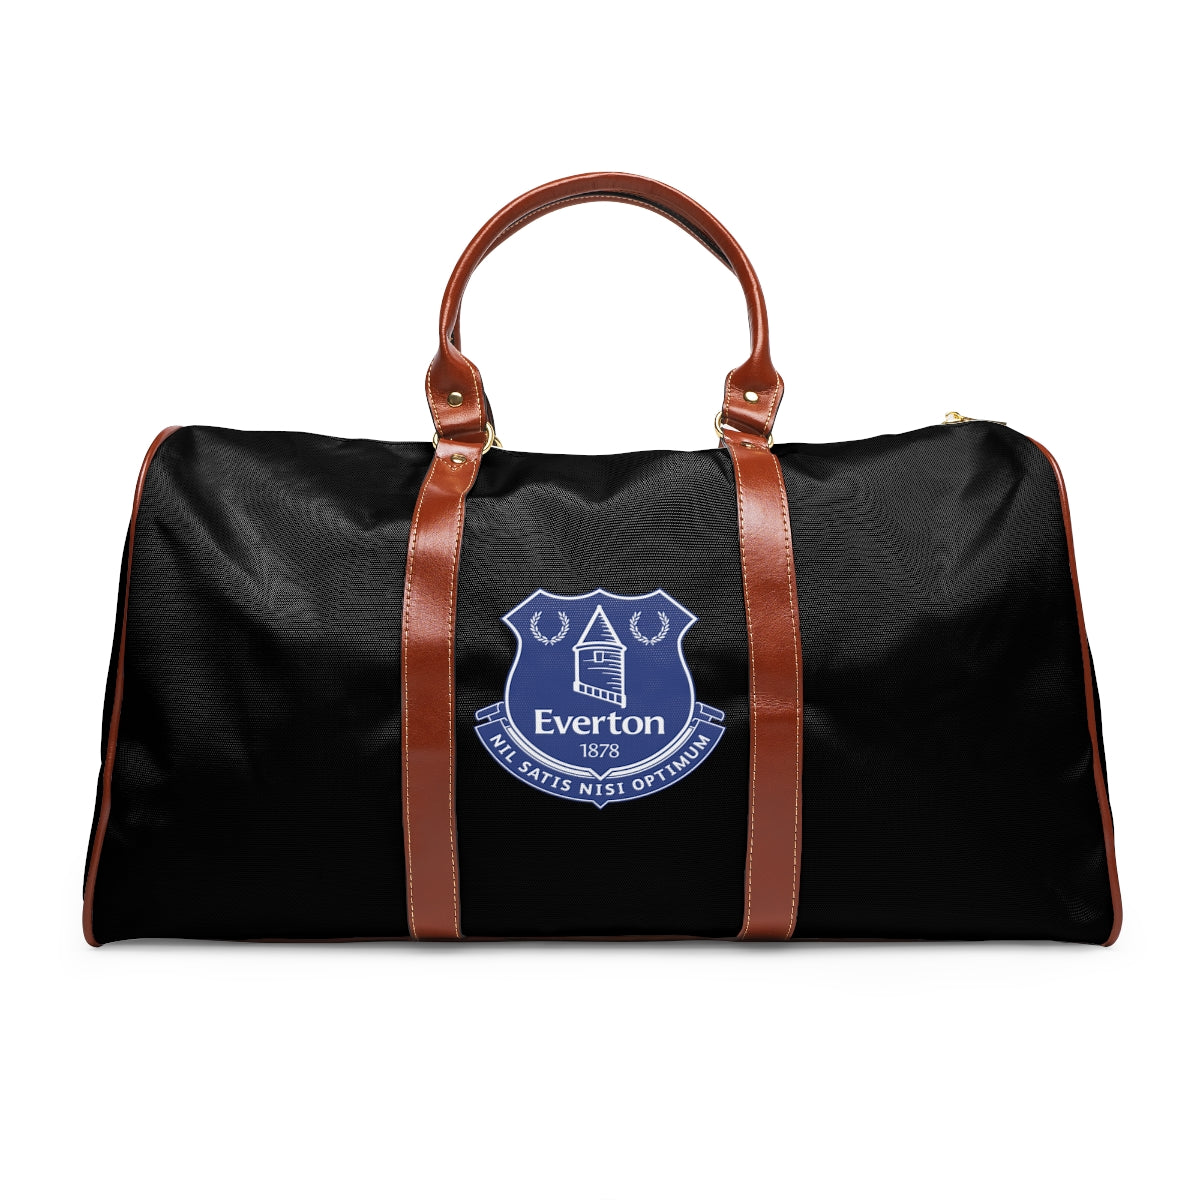 Everton Waterproof Travel Bag